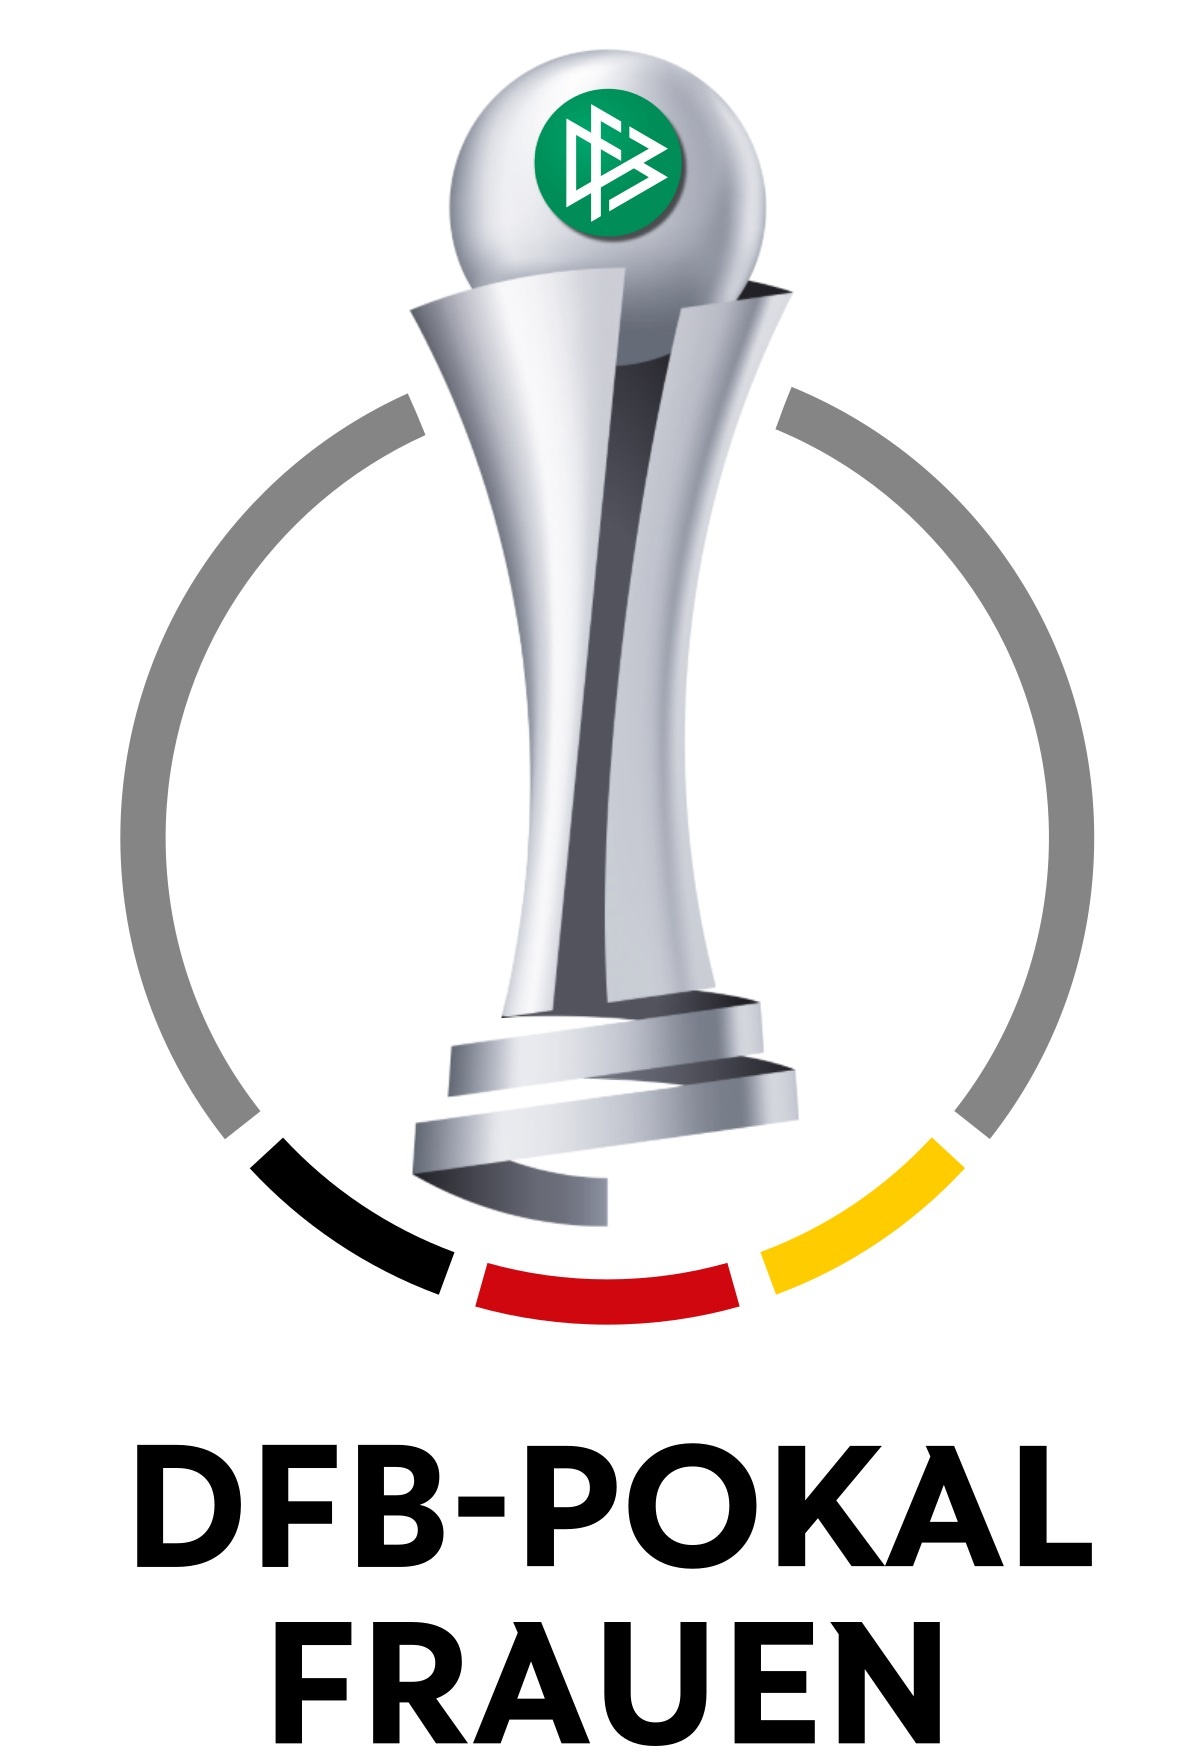 DFB Pokal Frauen